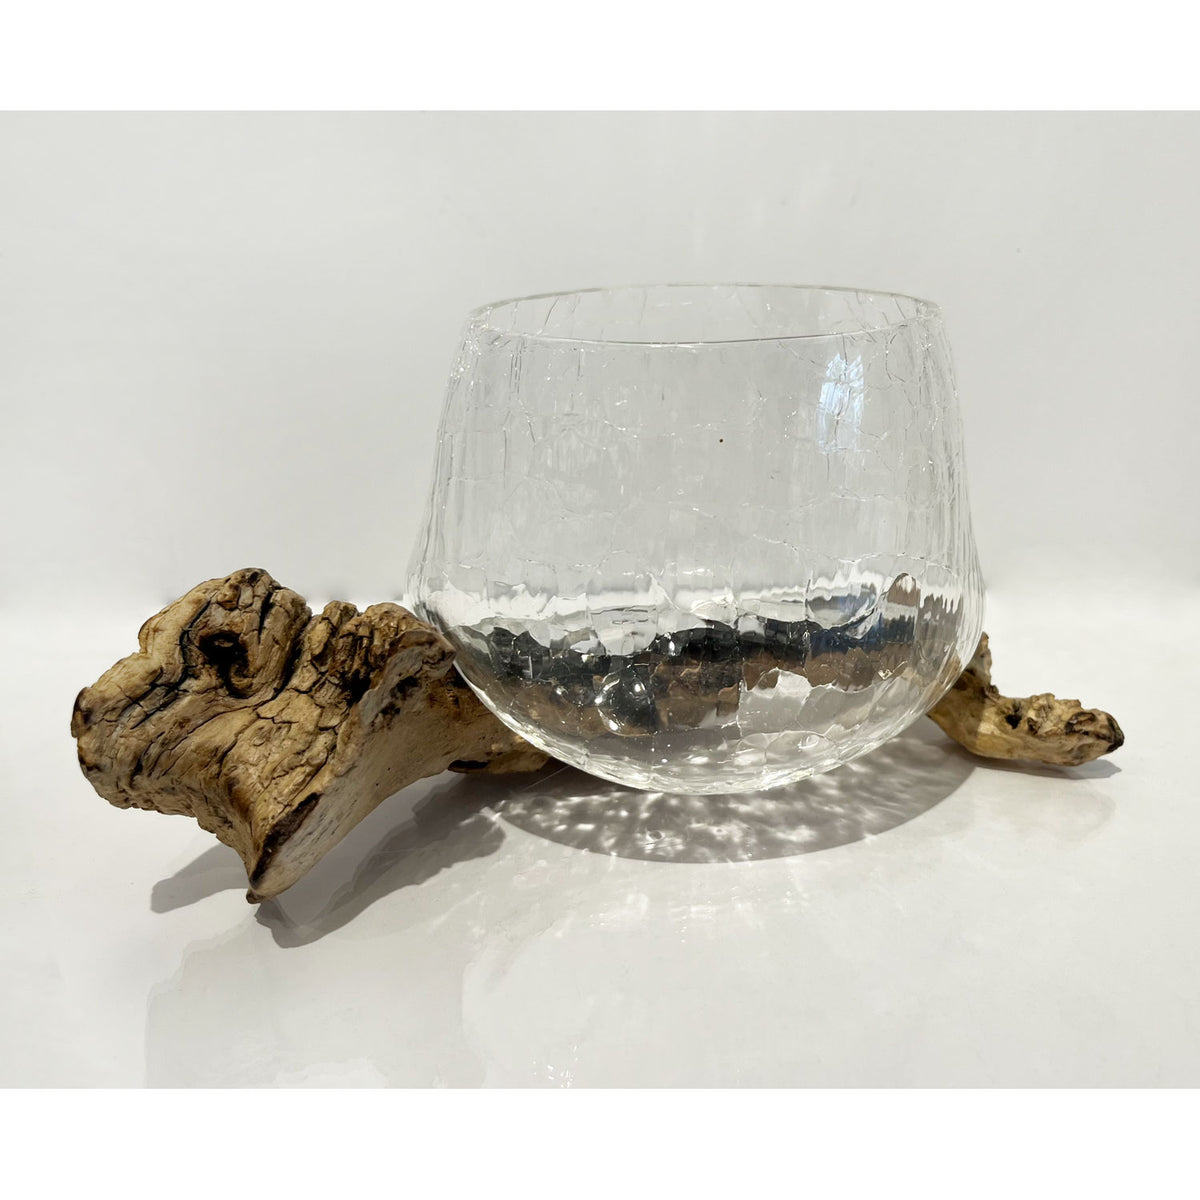 Michelle Bosveld - Crackle Glass Driftwood Bowl, 4" x 8" x 4"